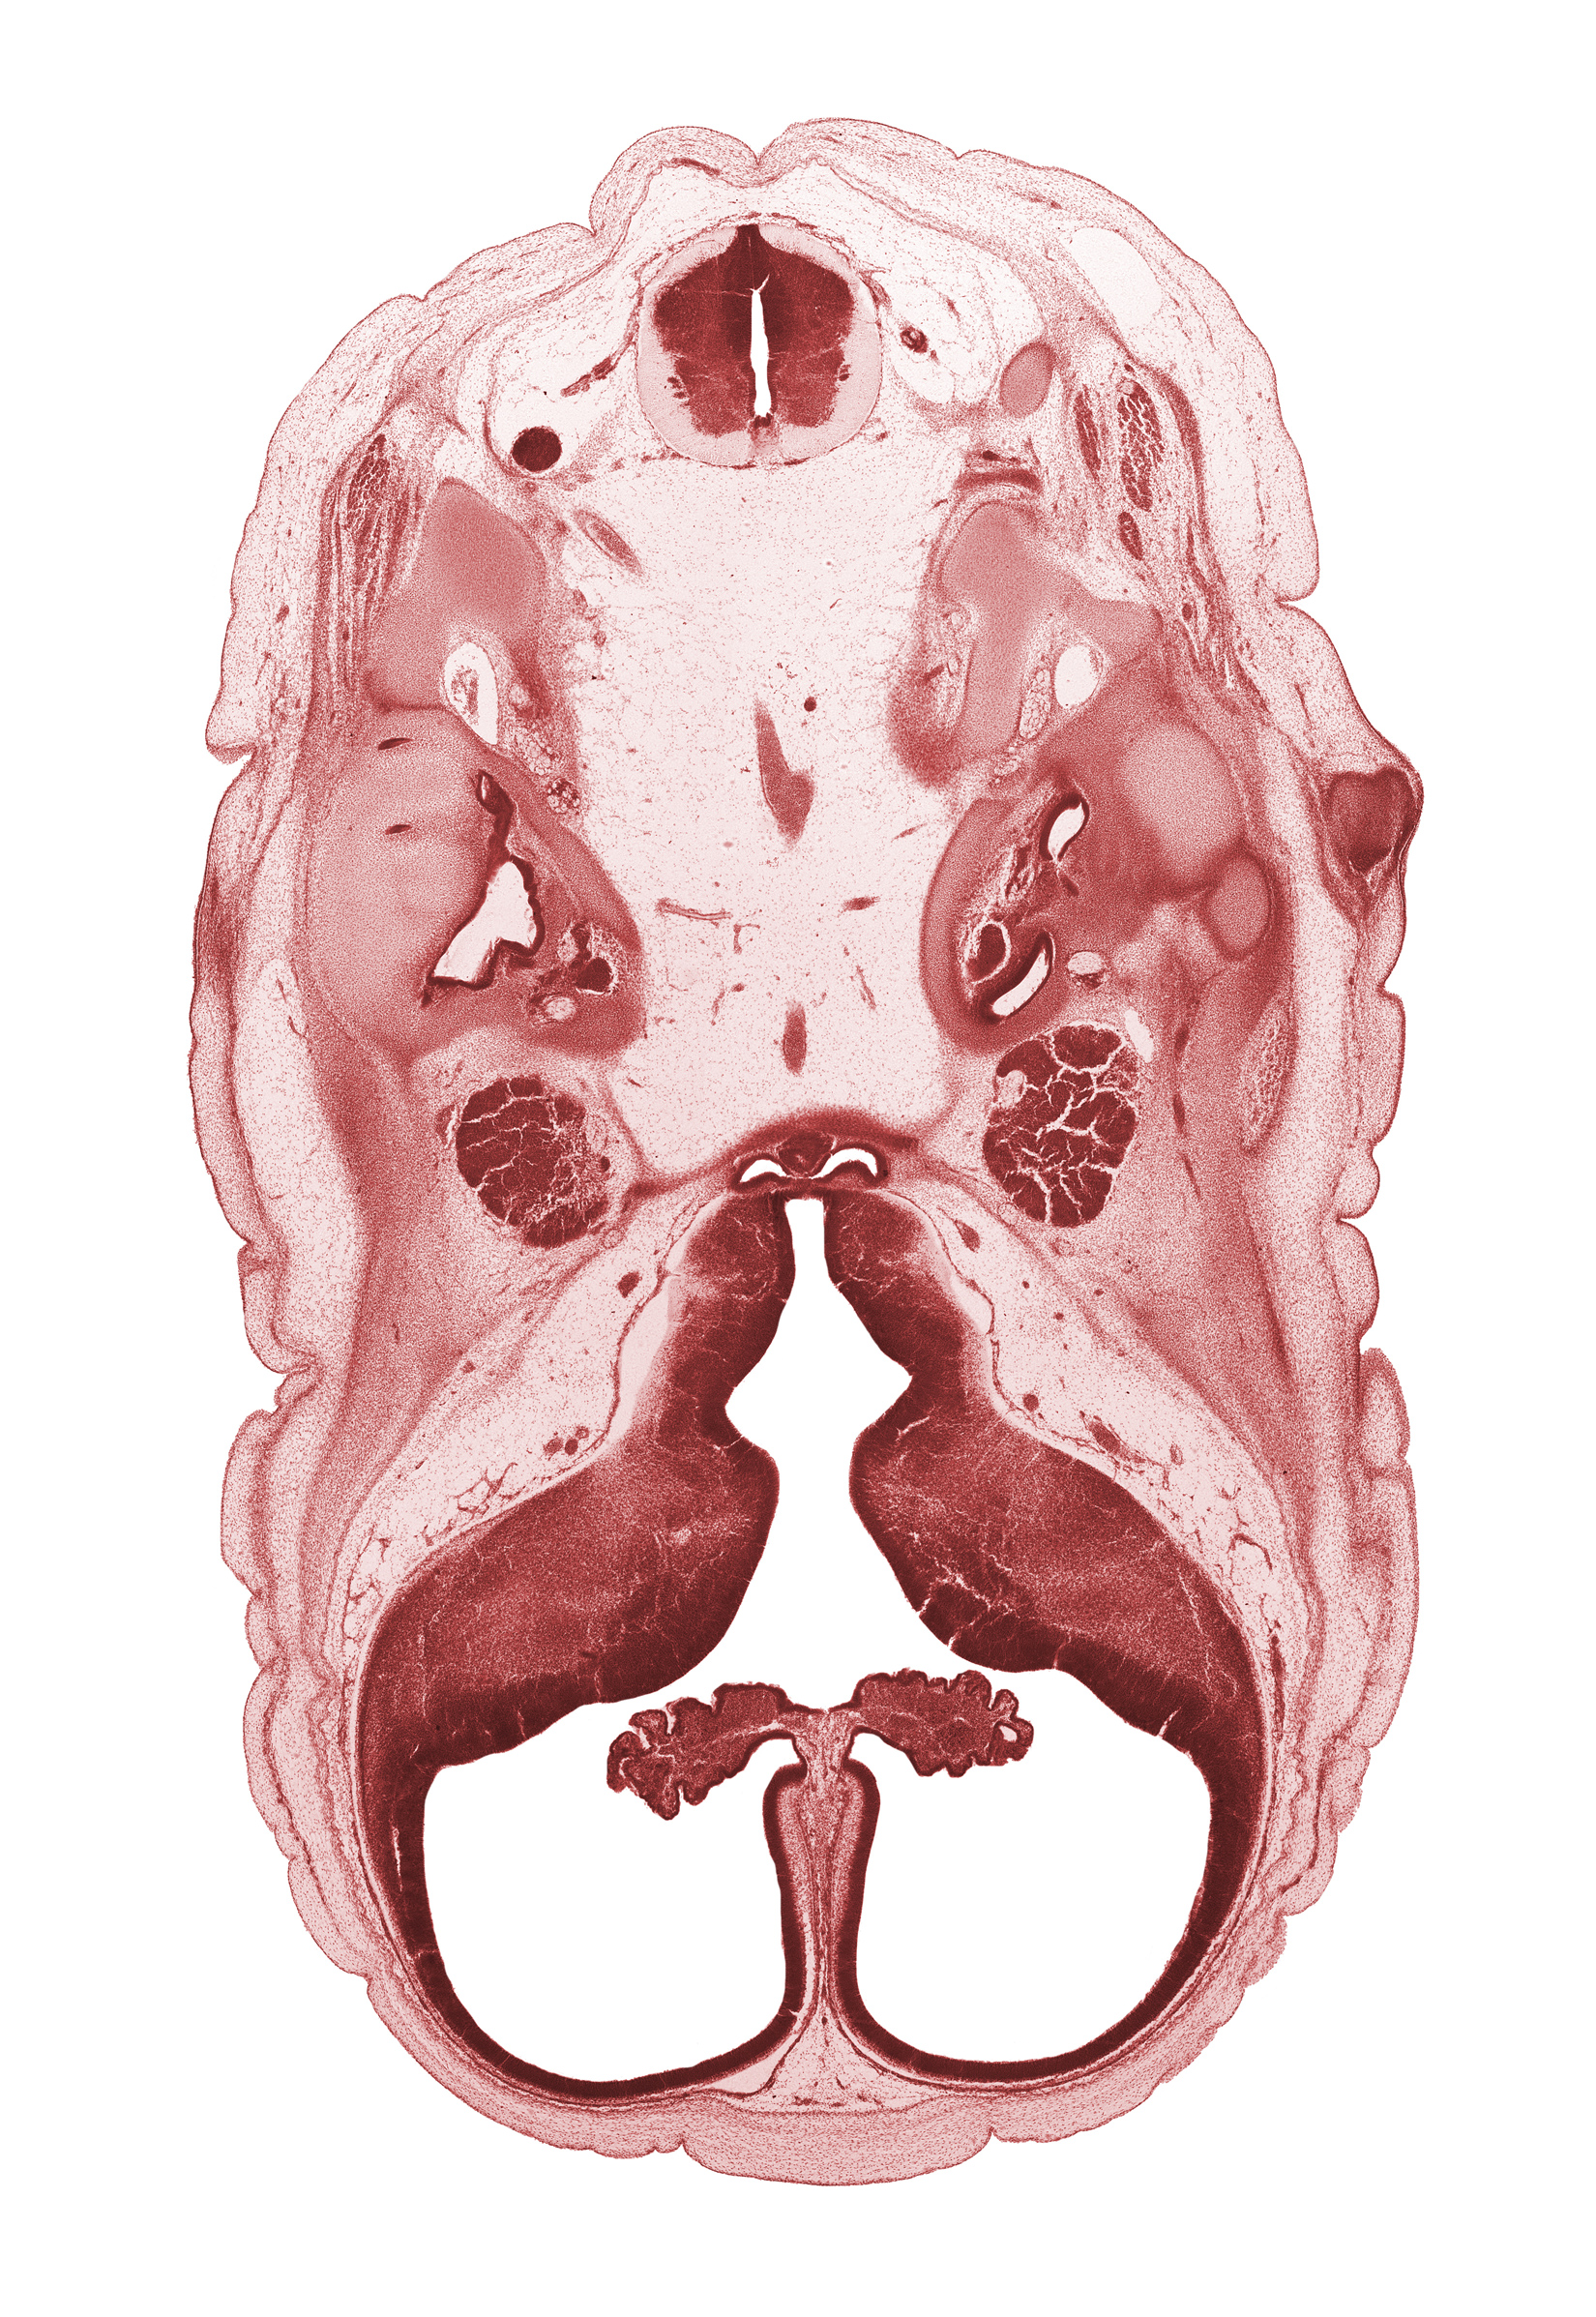 C-1 spinal nerve, abducens nerve (CN VI), basilar artery, central canal, cerebral vesicle (hemisphere), choroid plexus, cochlear duct, facial nerve (CN VII), falx cerebri region, head mesenchyme, hypoglossal nerve (CN XII), interventricular foramen, junction of basilar artery and vertebral arteries, lateral ventricle, lateral ventricular eminence (telencephalon), medial ventricular eminence (diencephalon), neurohypophysis, otic capsule cartilage, pharyngeal arch 1 cartilage (Meckel), posterior communicating artery, subarachnoid space, trigeminal ganglion (CN V), utricle, venous plexus(es), vertebral artery